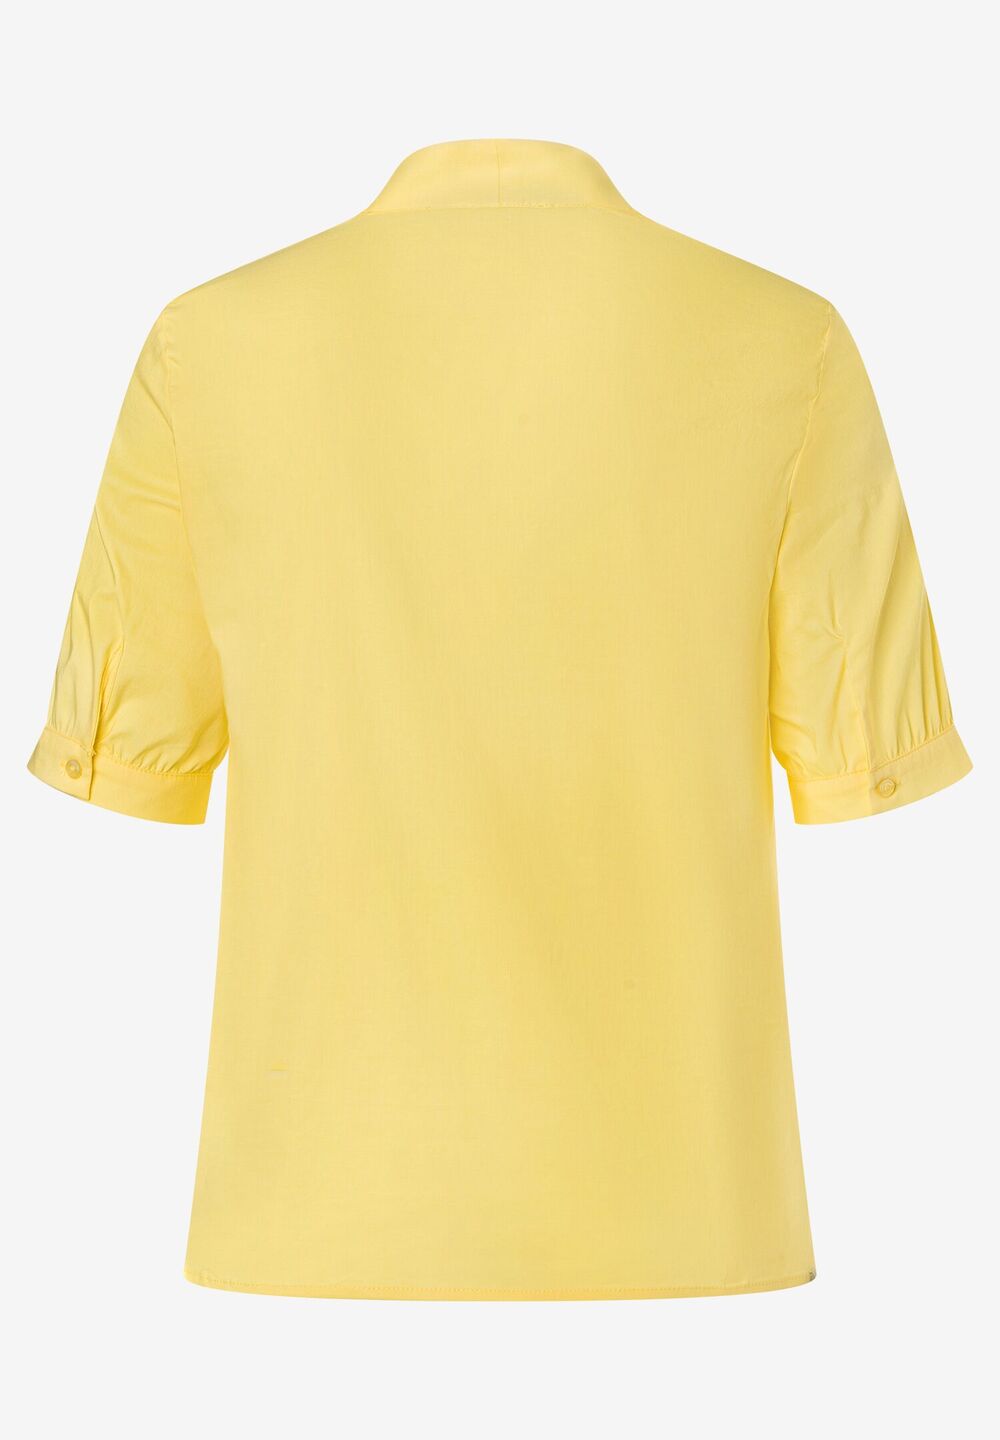 Bluse, daisy yellow, Frühjahrs-Kollektion, gelb Rückansicht